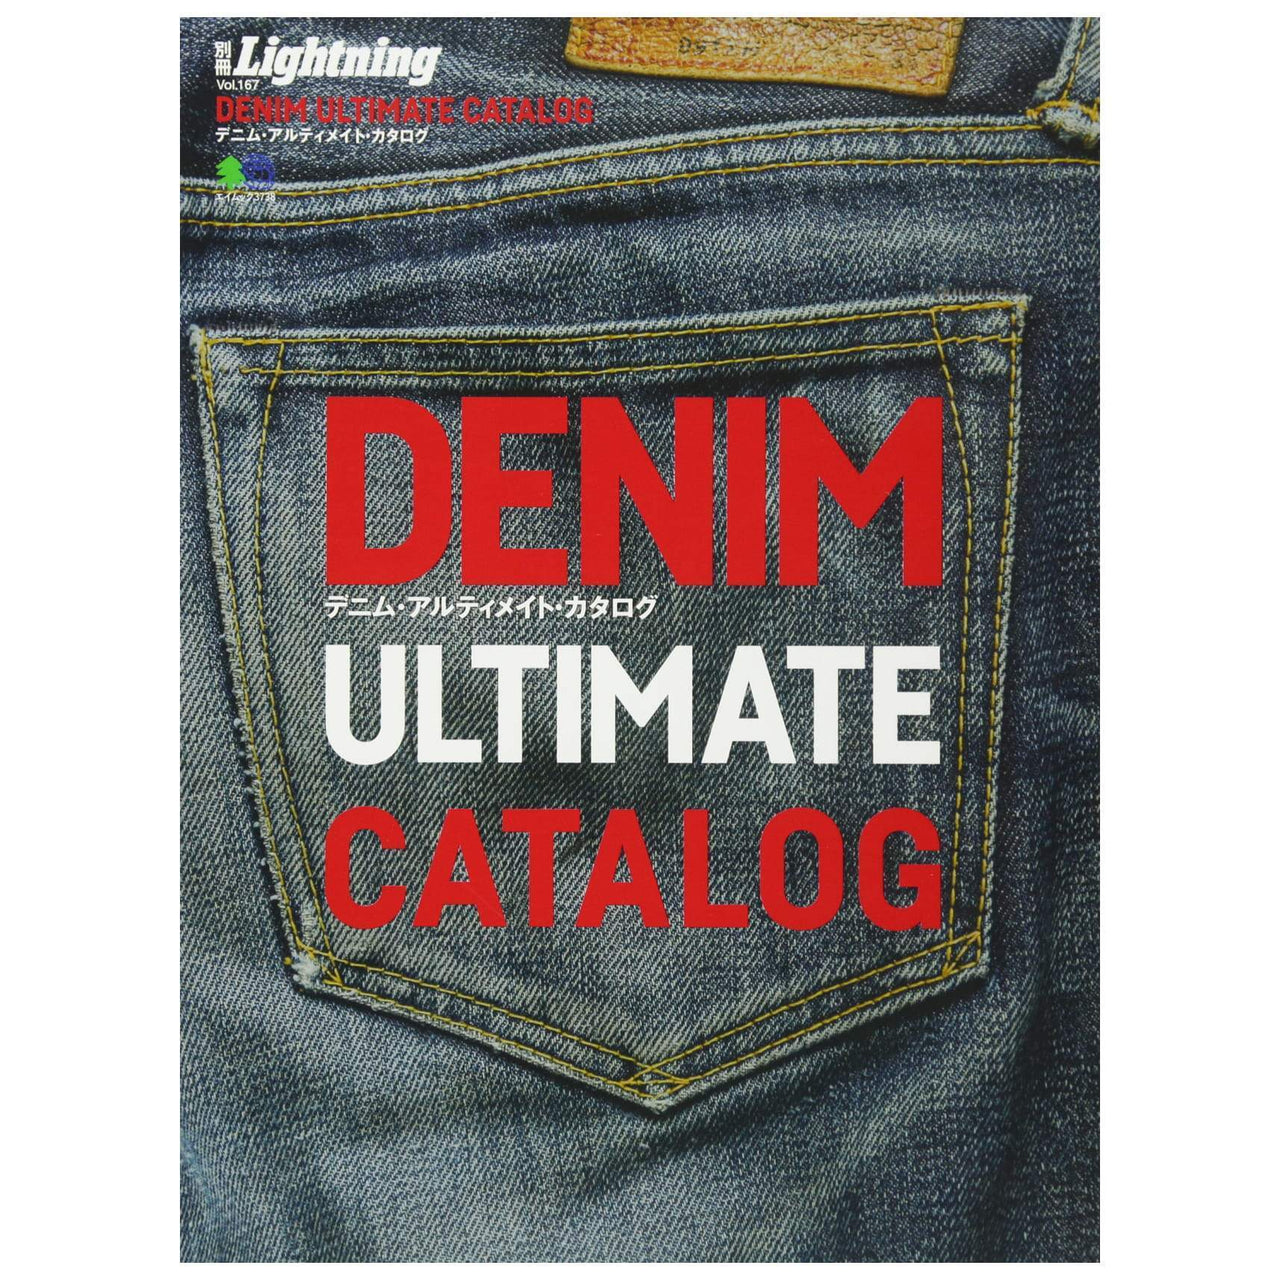 Lightning Archives Vol.167 "Denim Ultimate Catalog"-Magazine-Clutch Cafe